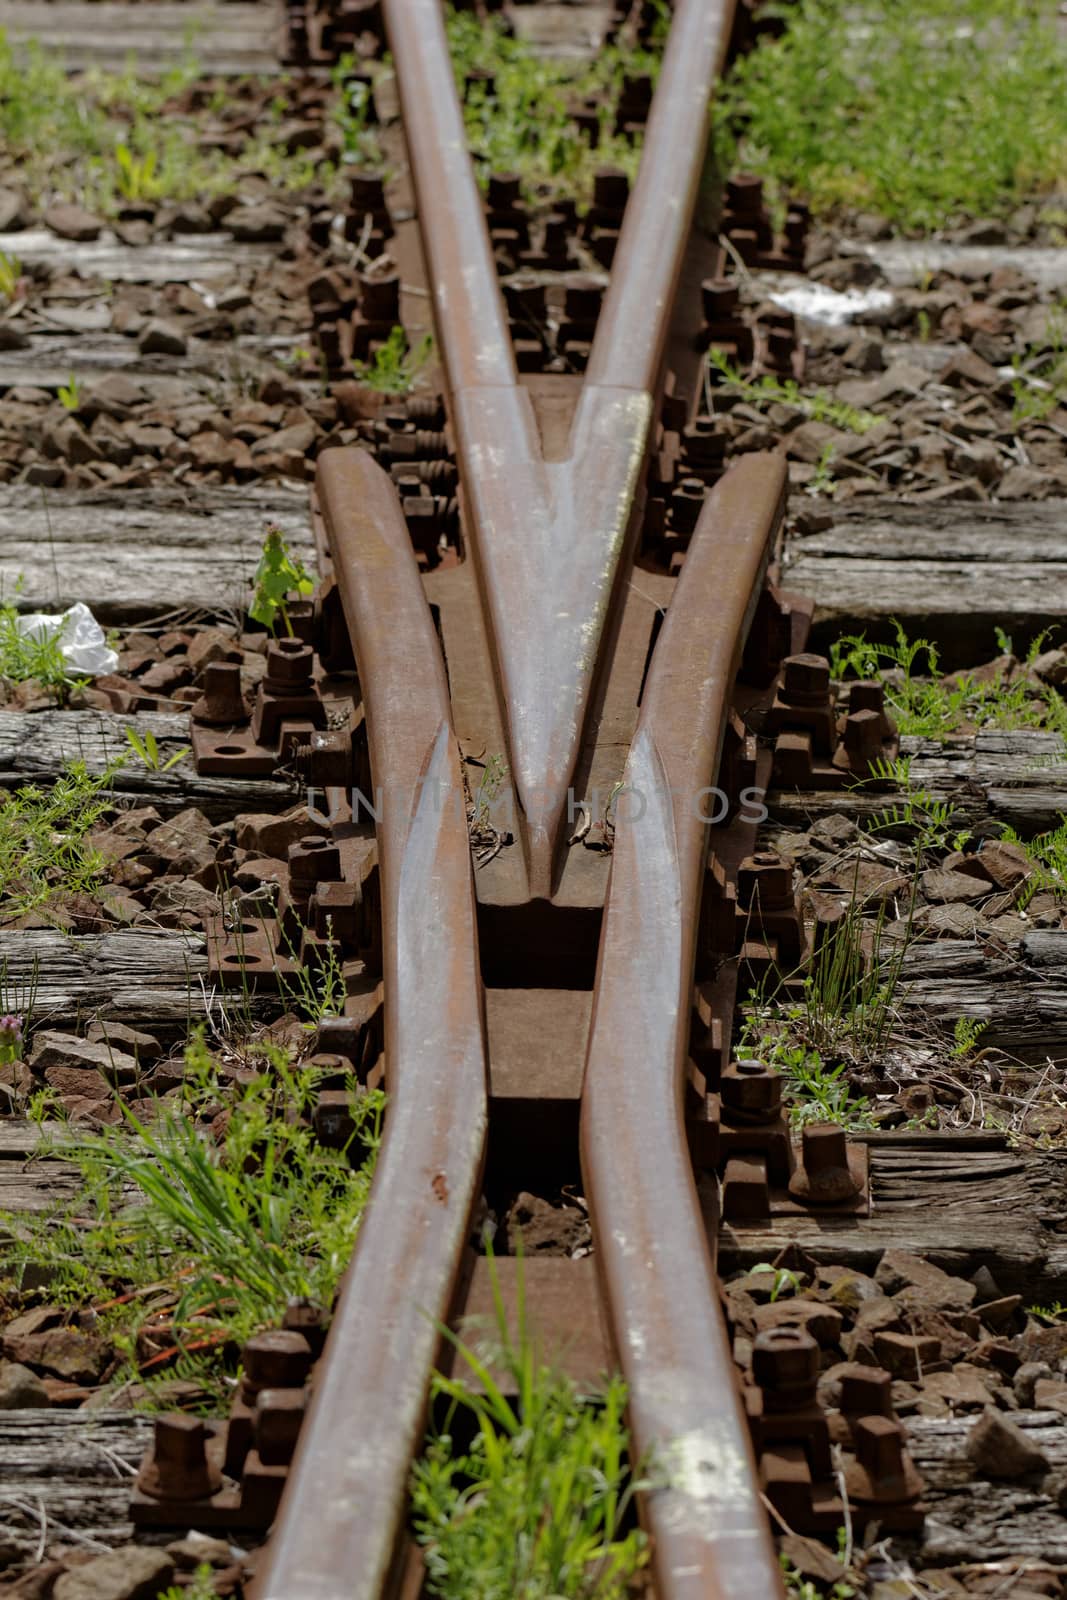 rusty railway track crossing